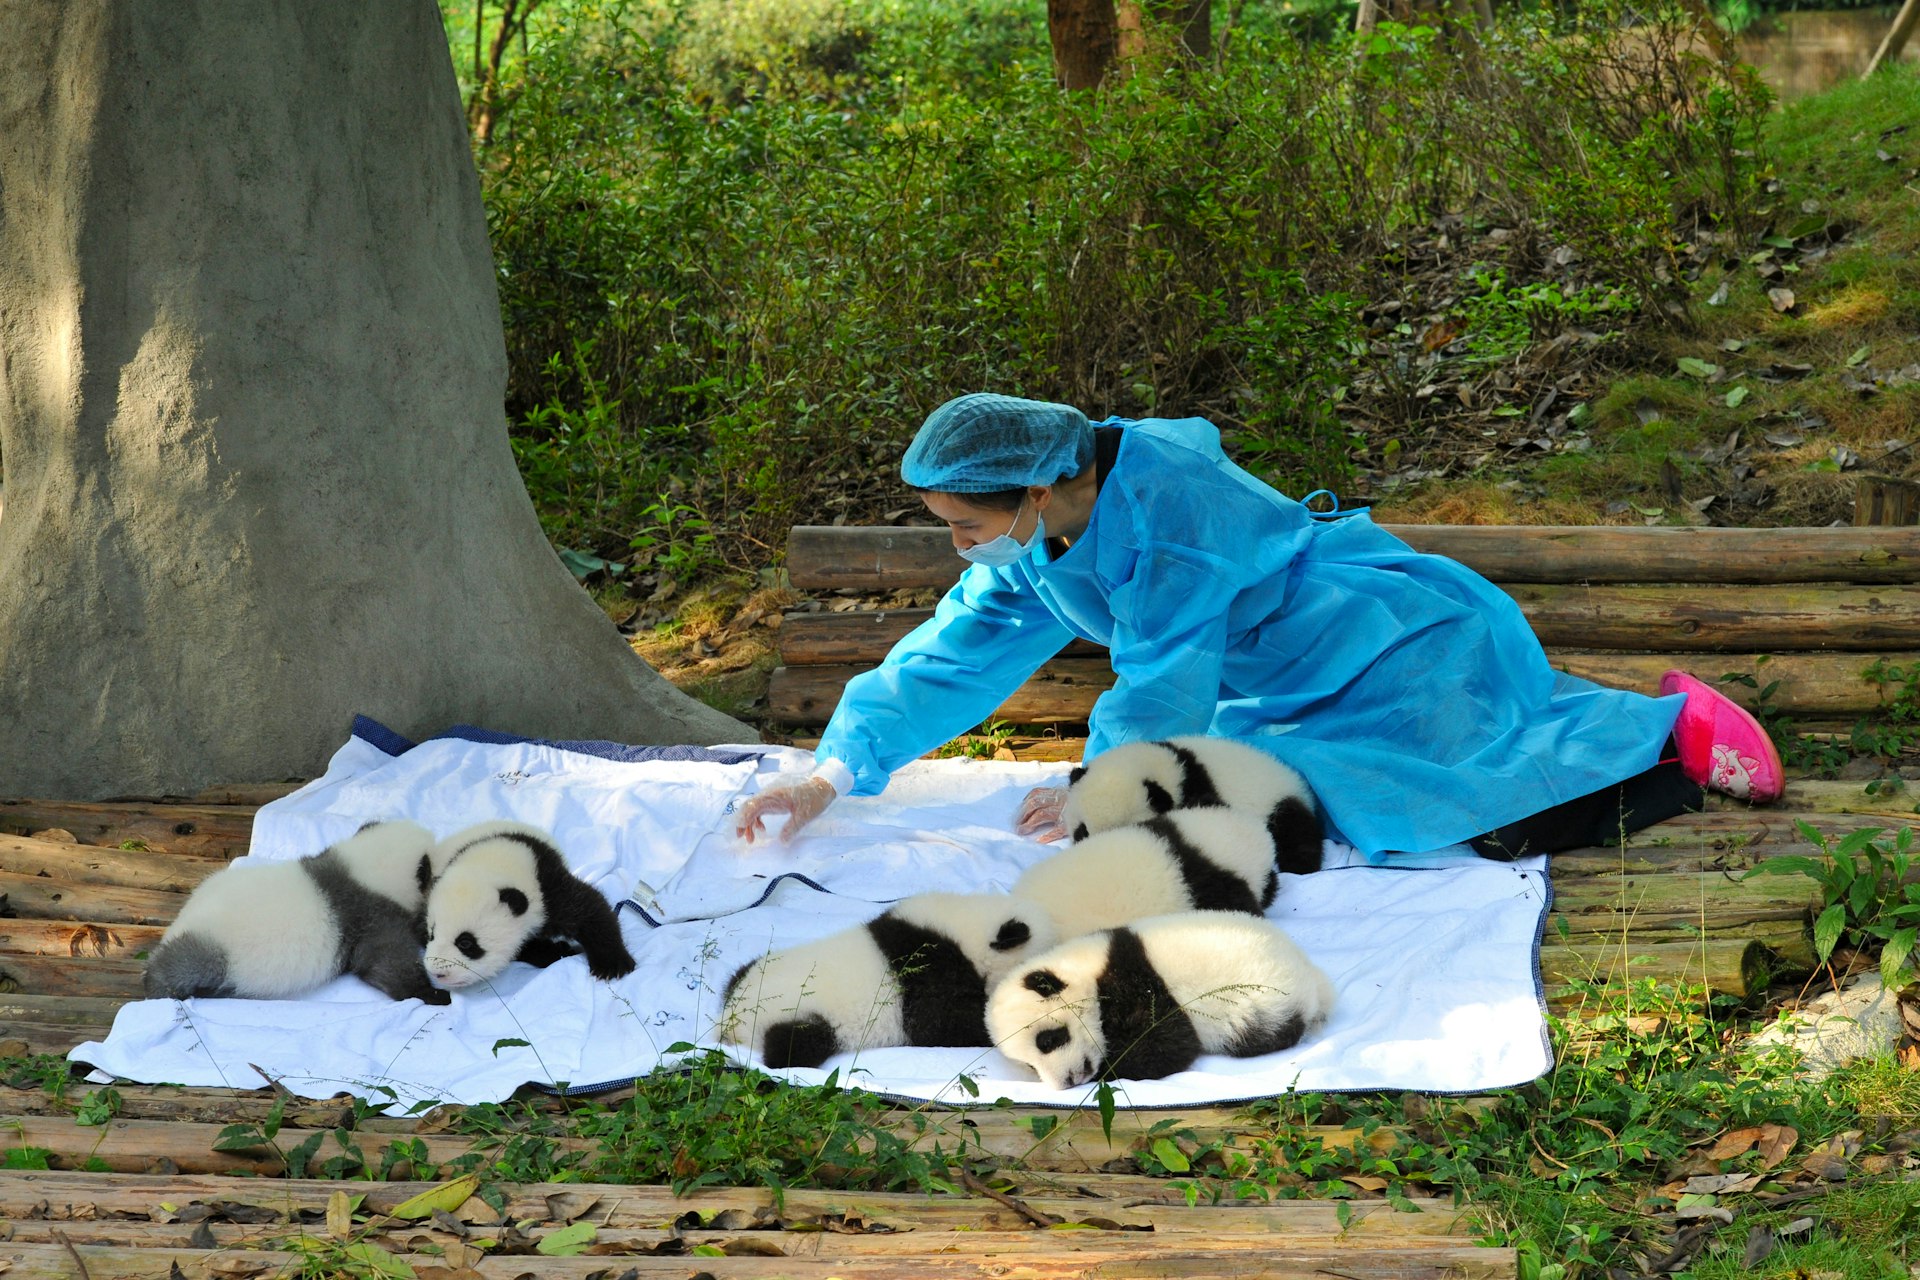 A caretaker with baby pandas, Chengdu